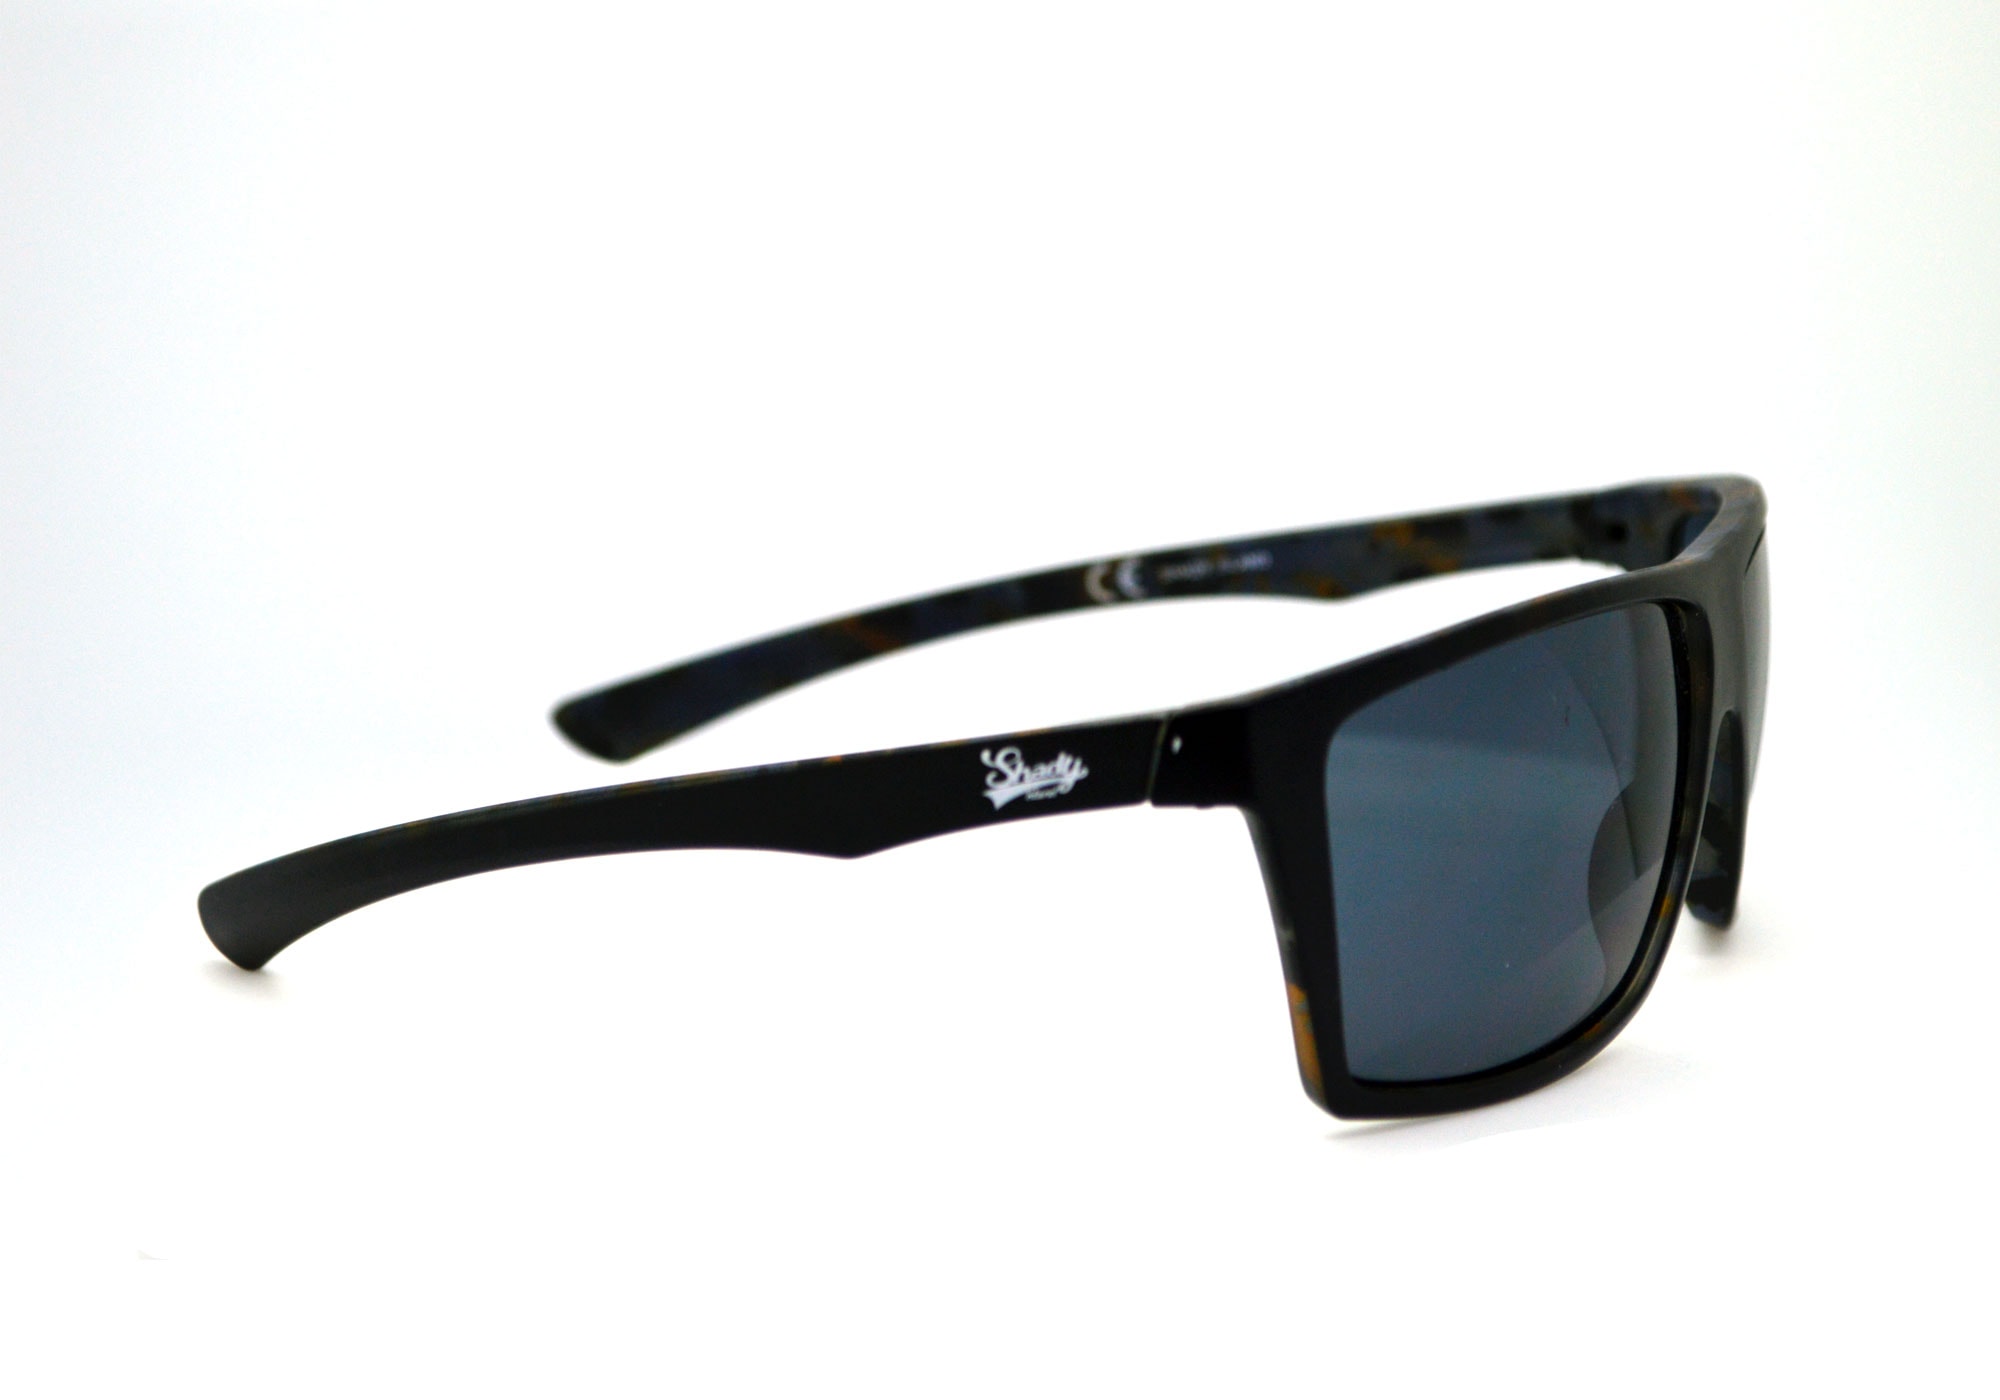 Shady Black Sporty Sunglasses with Dark Tint » Sporty » Jamaican ...